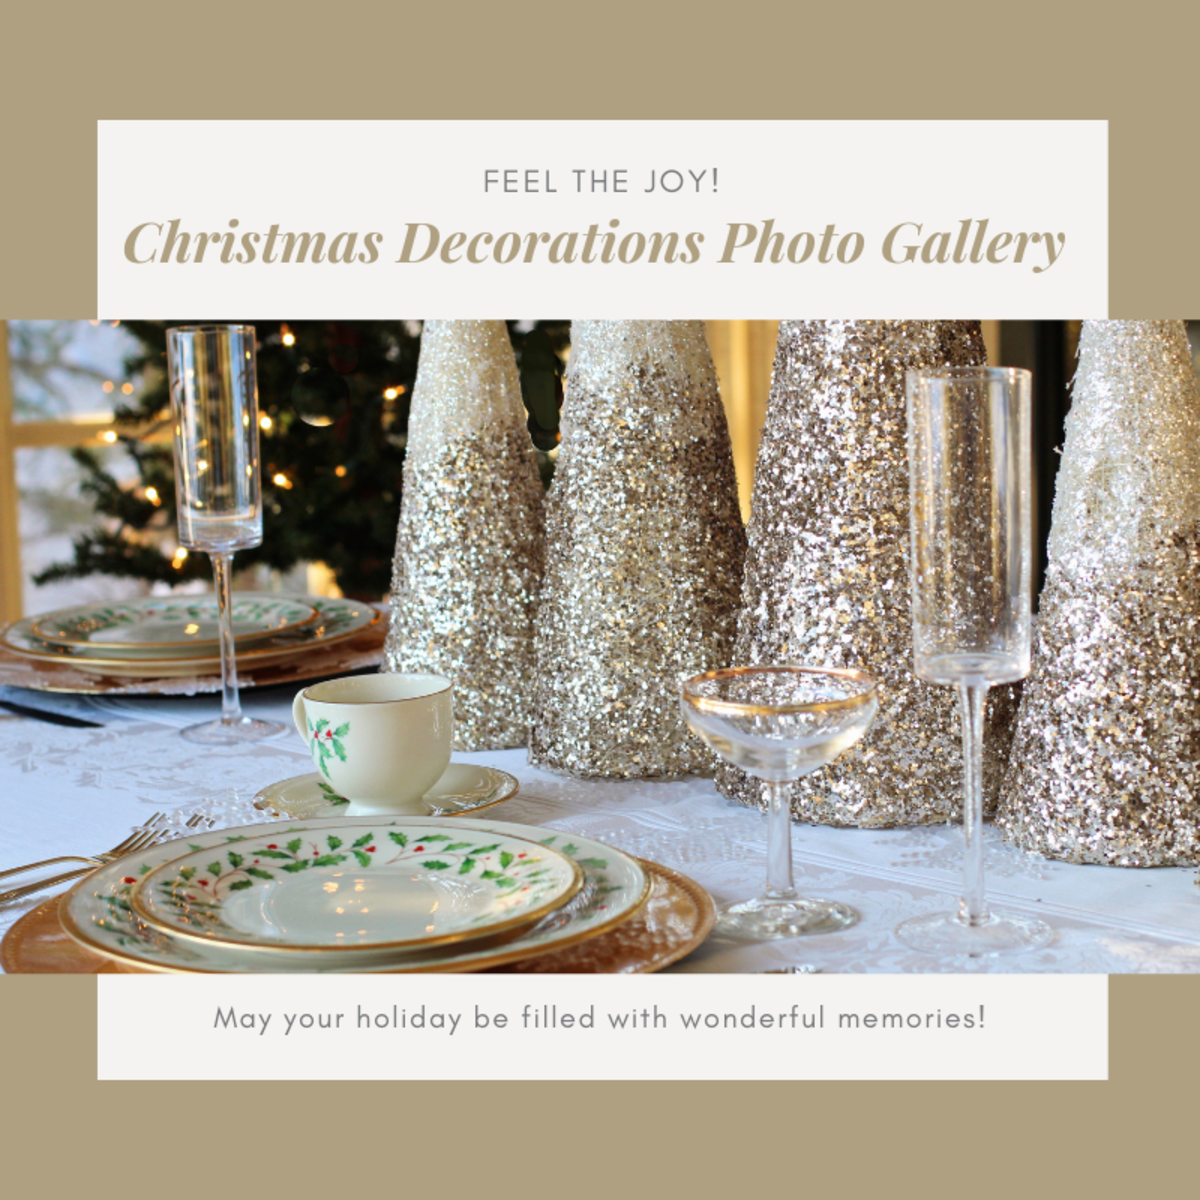 My Christmas Decoration Inspiration Photo Gallery